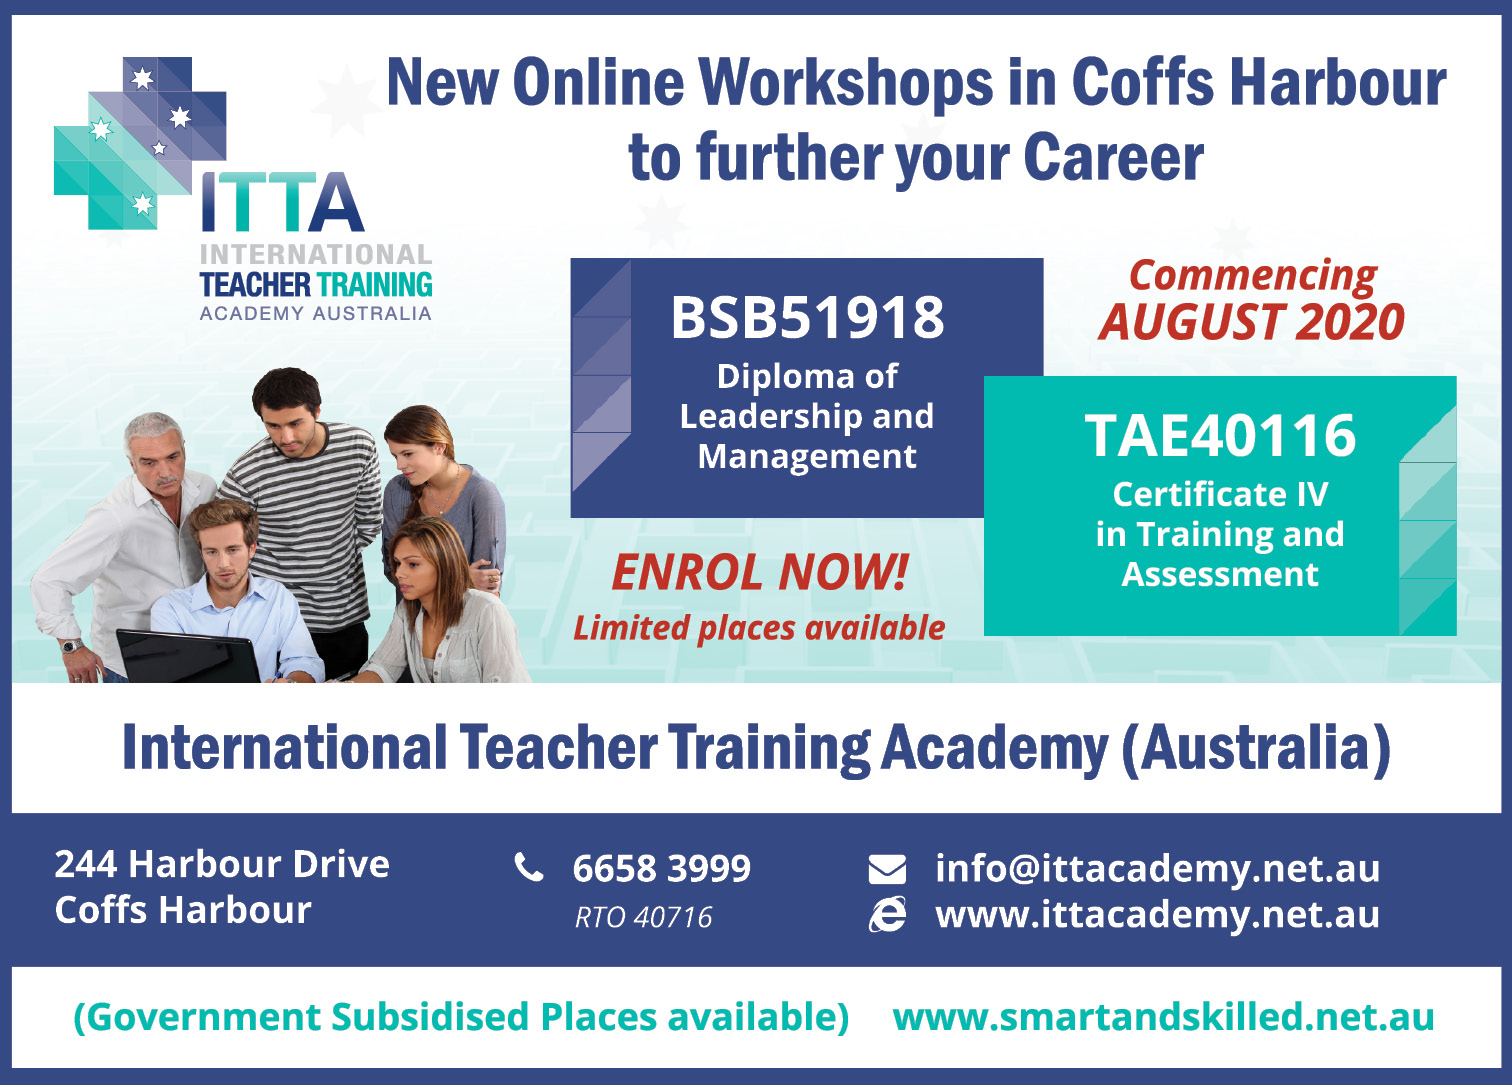 International Teacher Training Academy Australia